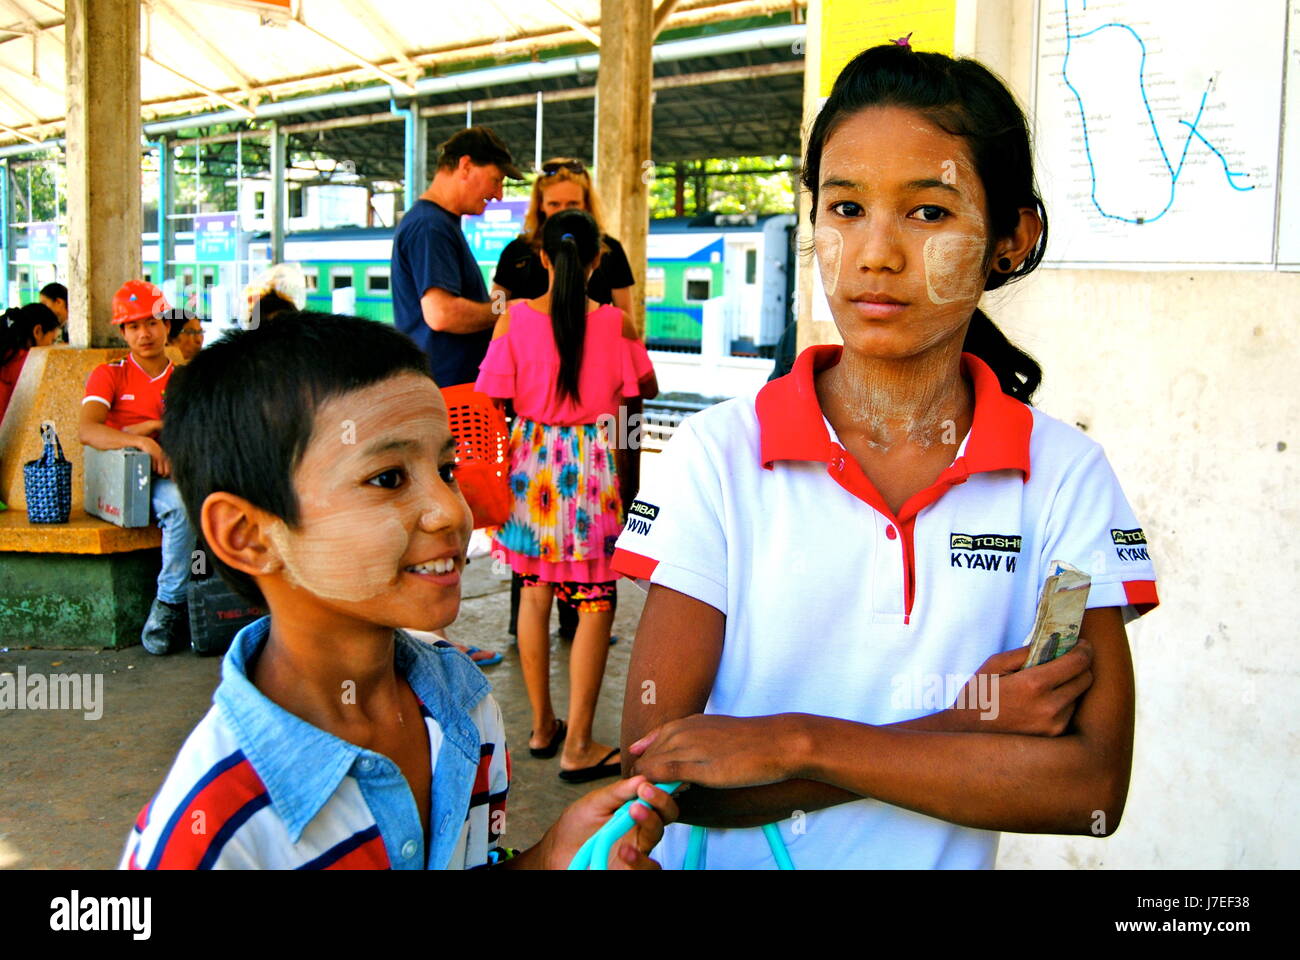 Burmese kids at a railway station, Yangon, Myanmar Stock Photo